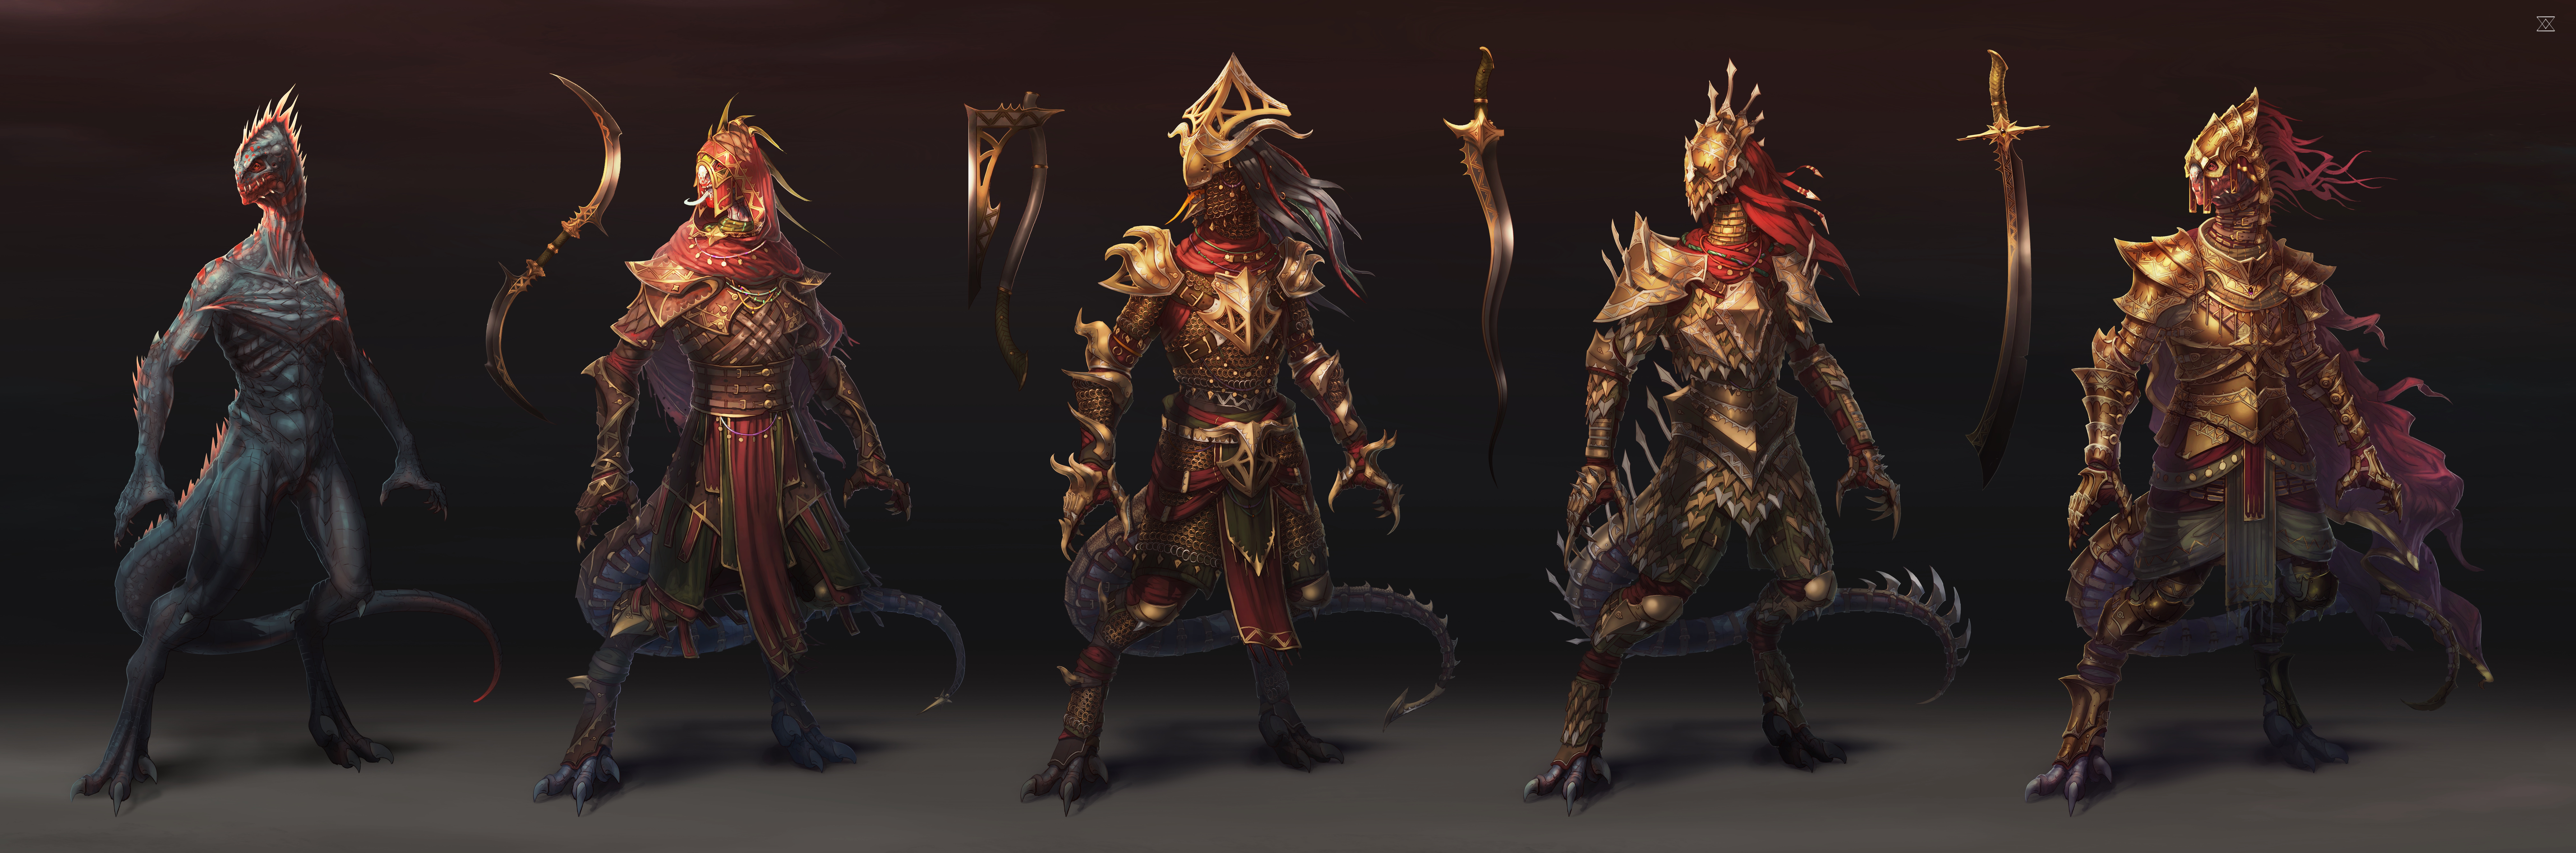 divinity 2 armor sets